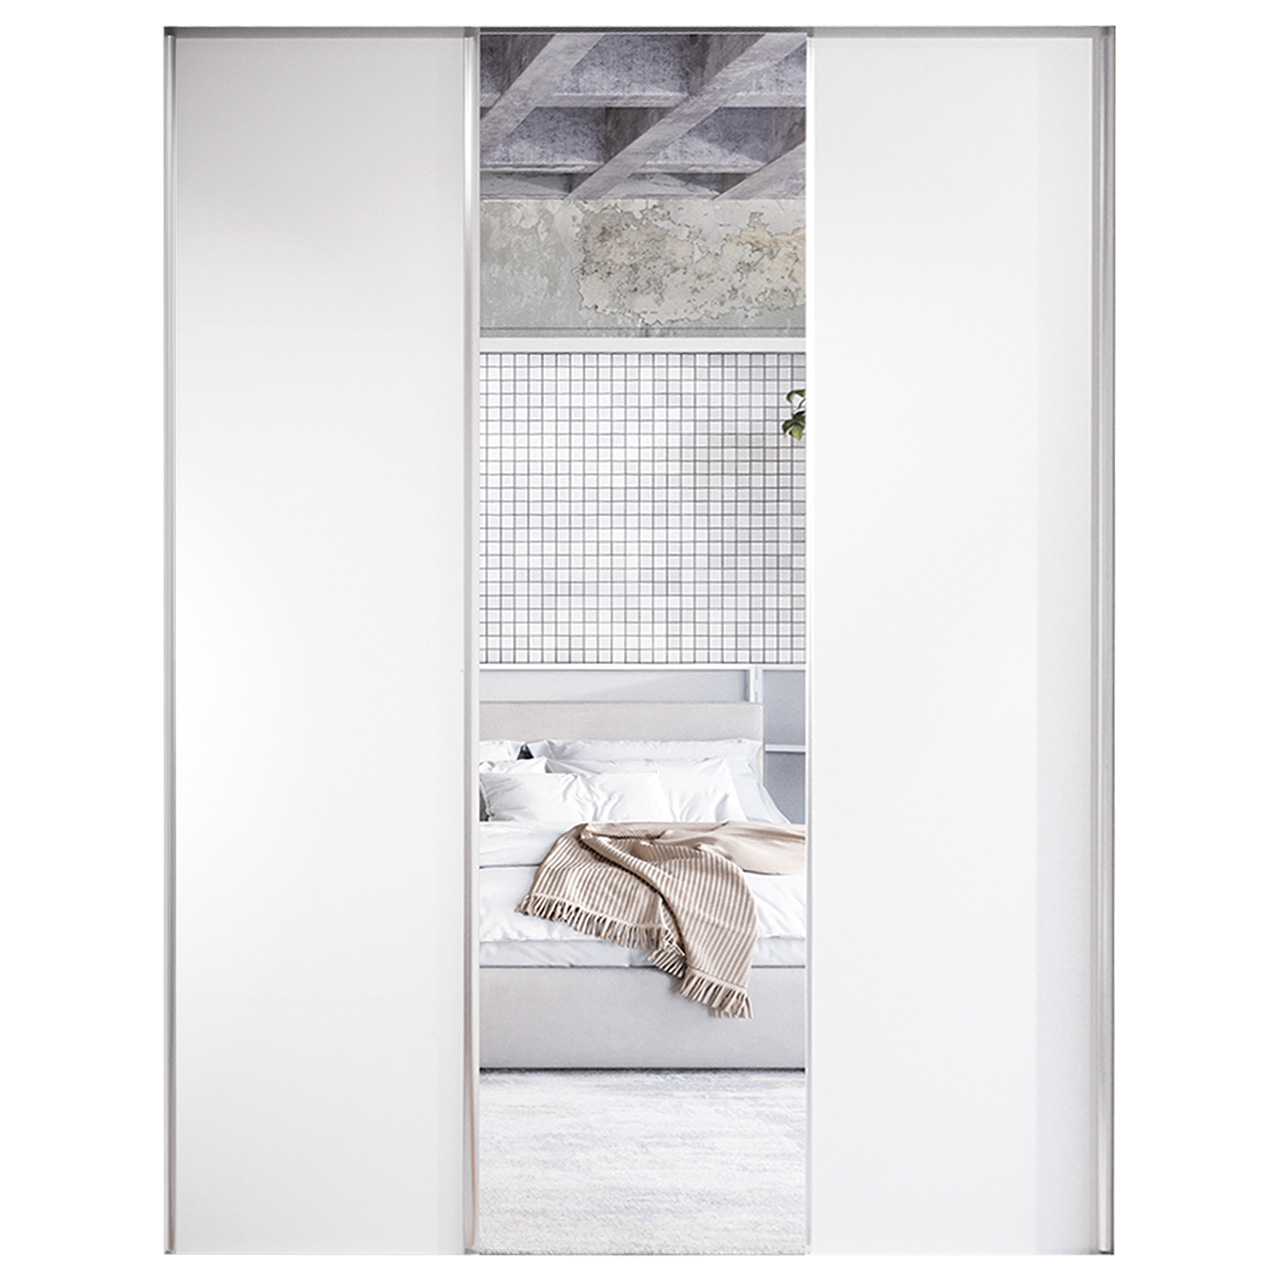 Siding door with mirror for wardrobe MERV F1 150 white